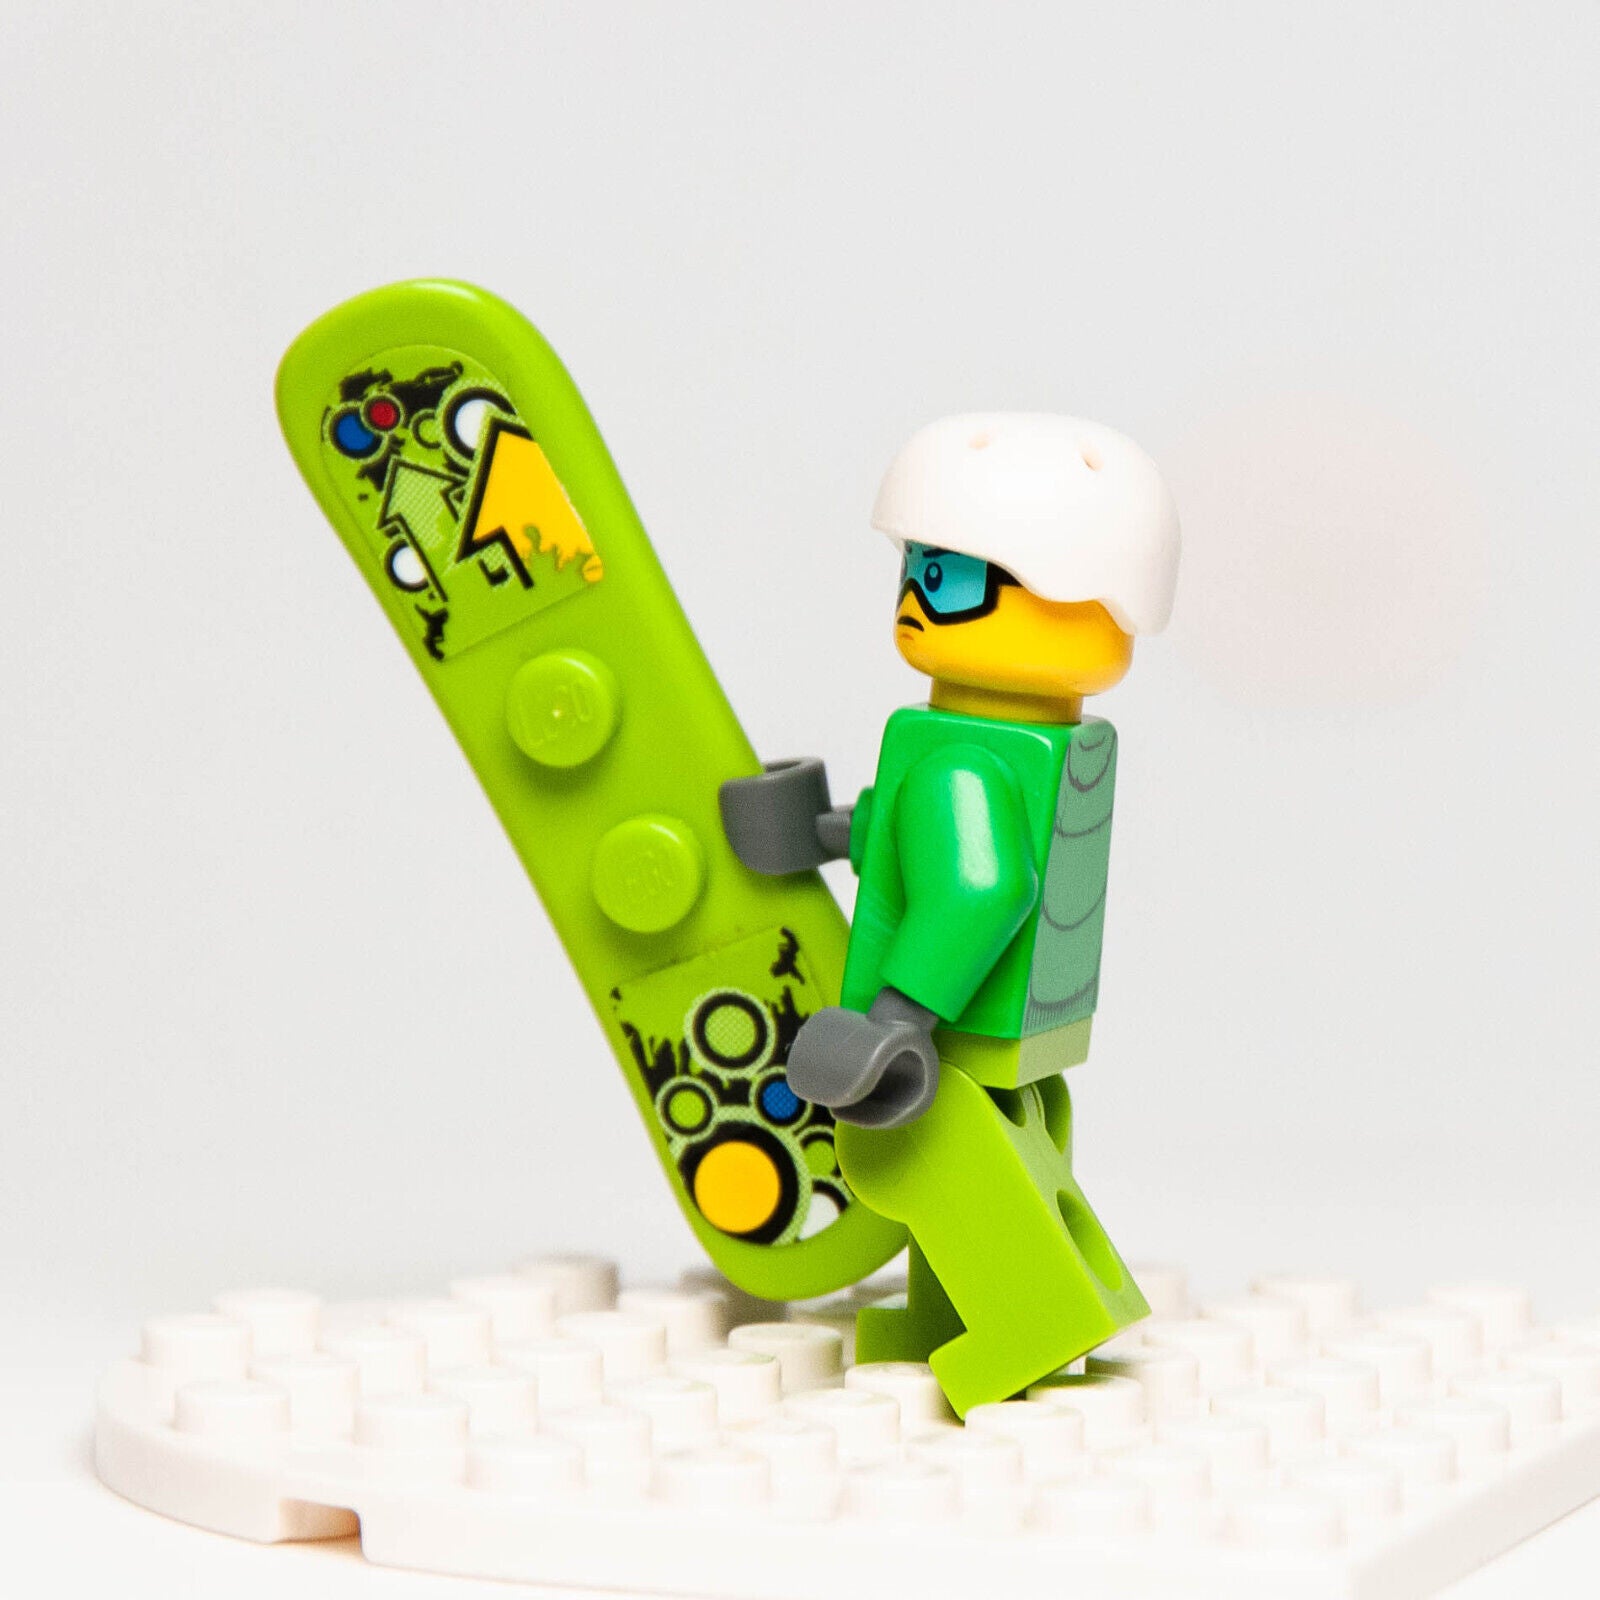 Lego City Minifigure - Winter Snowboarder Skier (cty0857) 60179